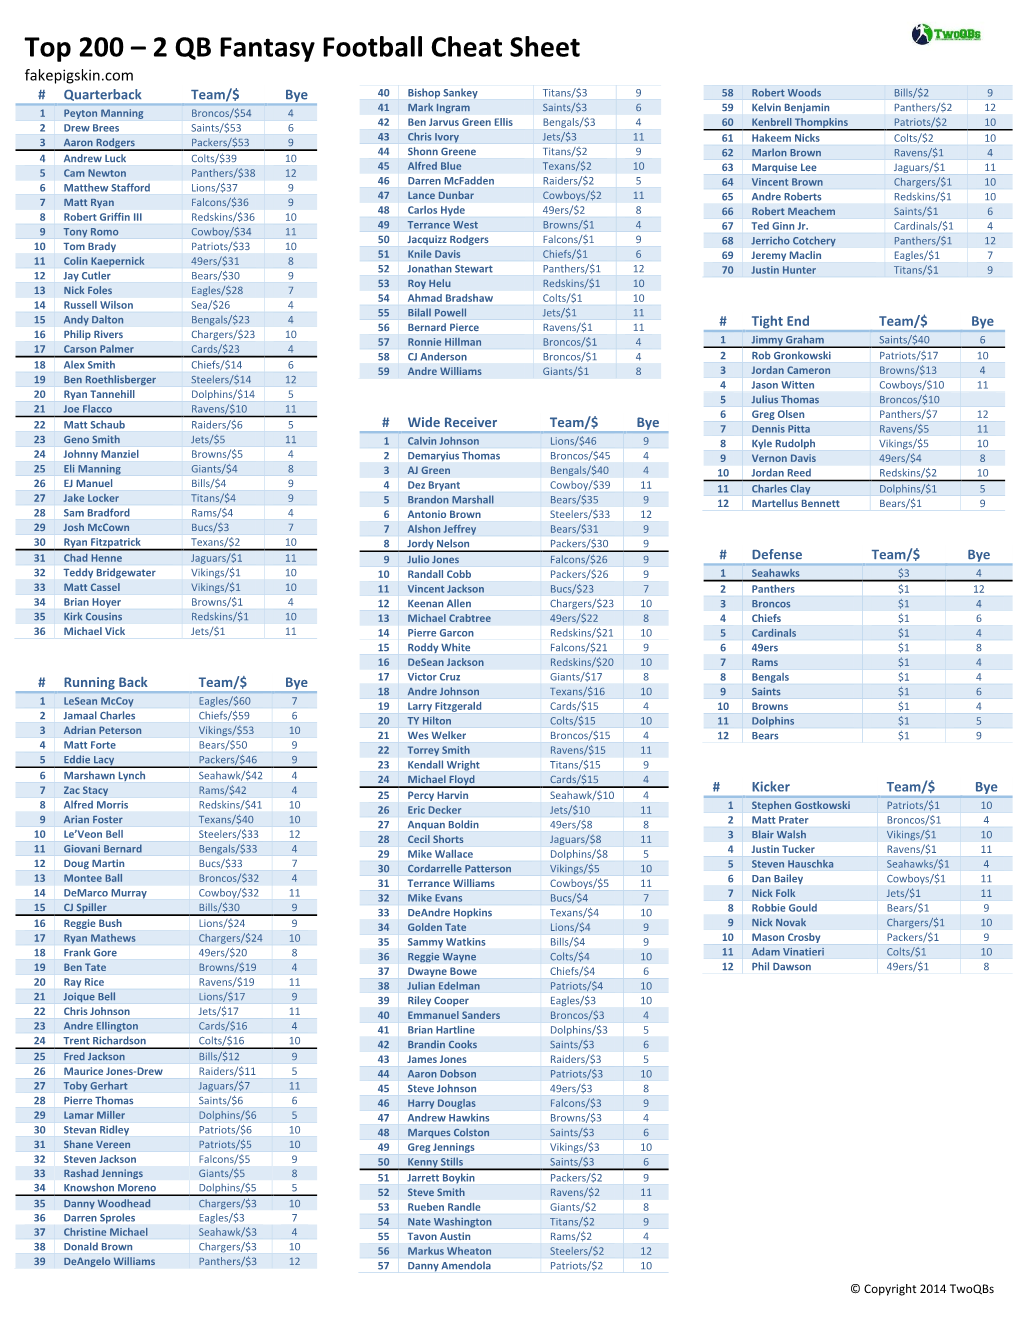 Top 200 – 2 QB Fantasy Football Cheat Sheet - DocsLib